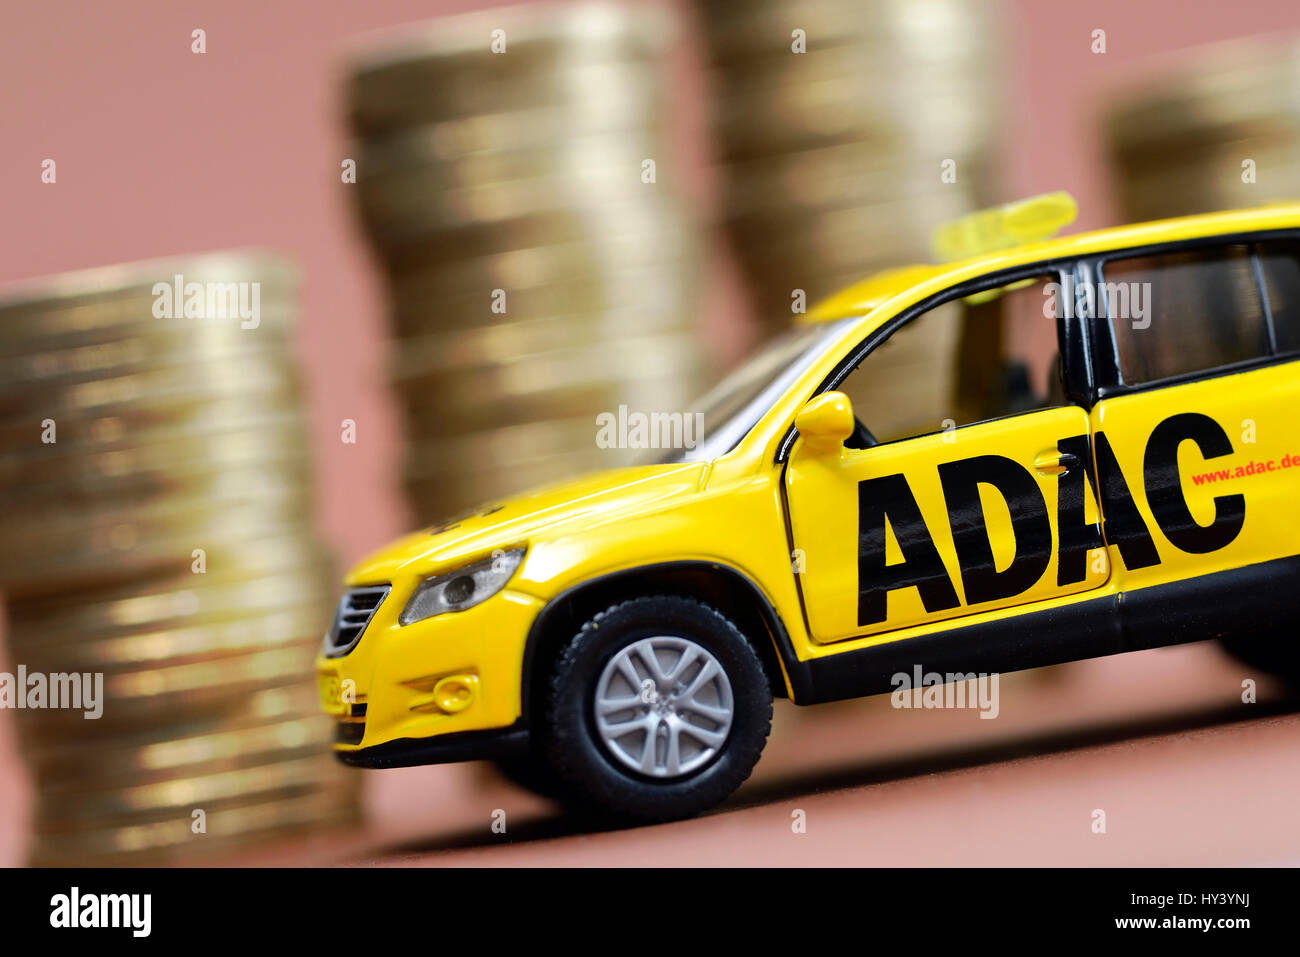 ADAC veicolo in miniatura e coin pila, ADAC Miniaturfahrzeug und Muenzstapel Foto Stock